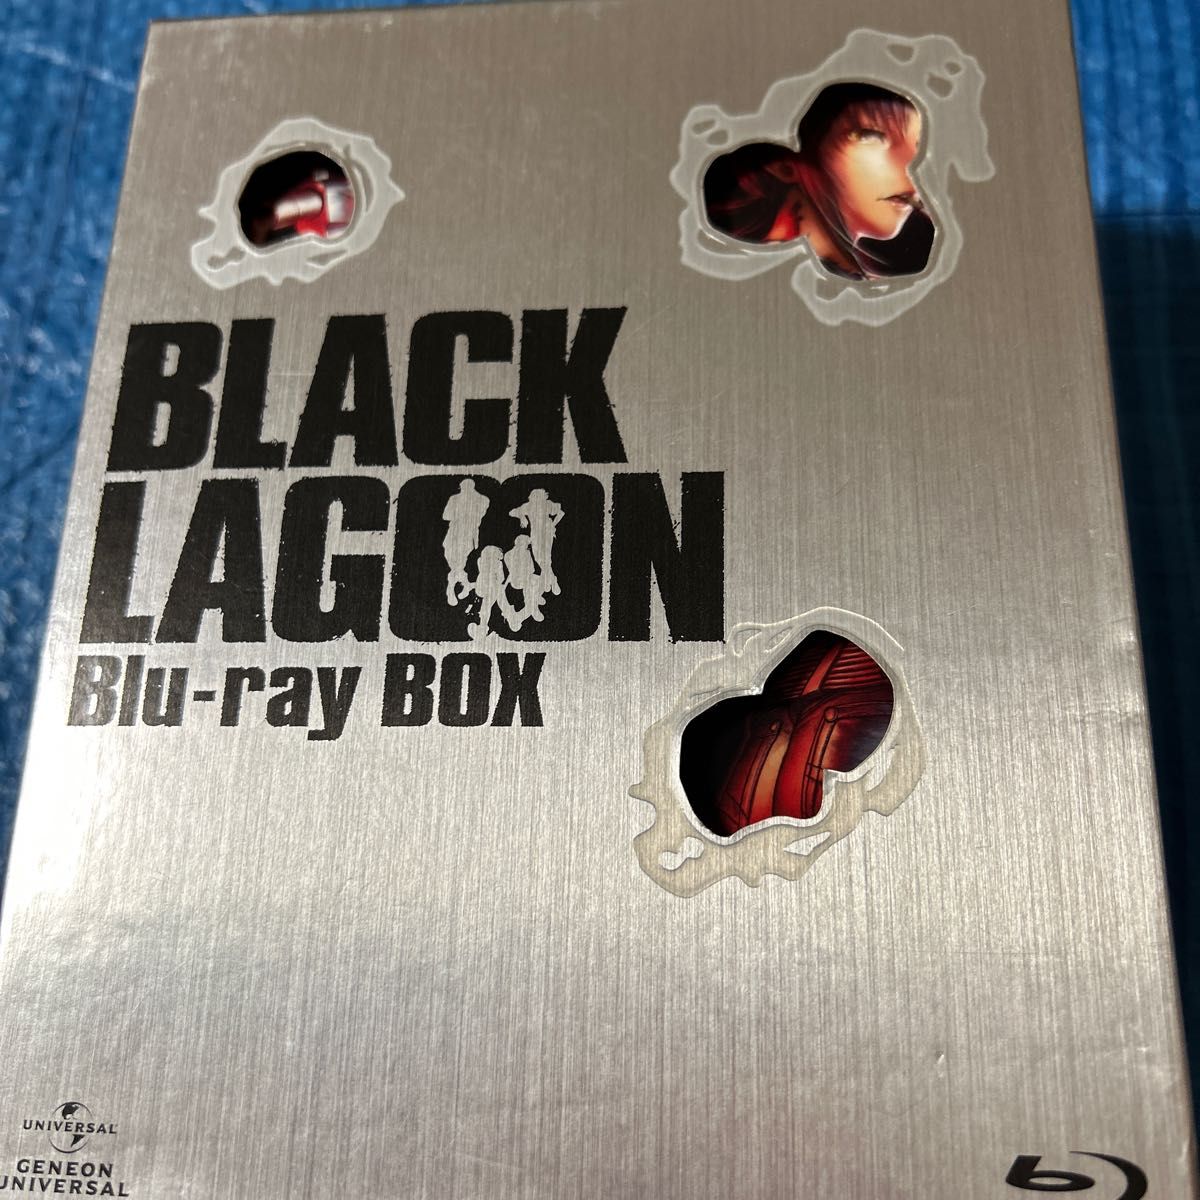 BLACK LAGOON Blu-ray BOX (初回限定版)